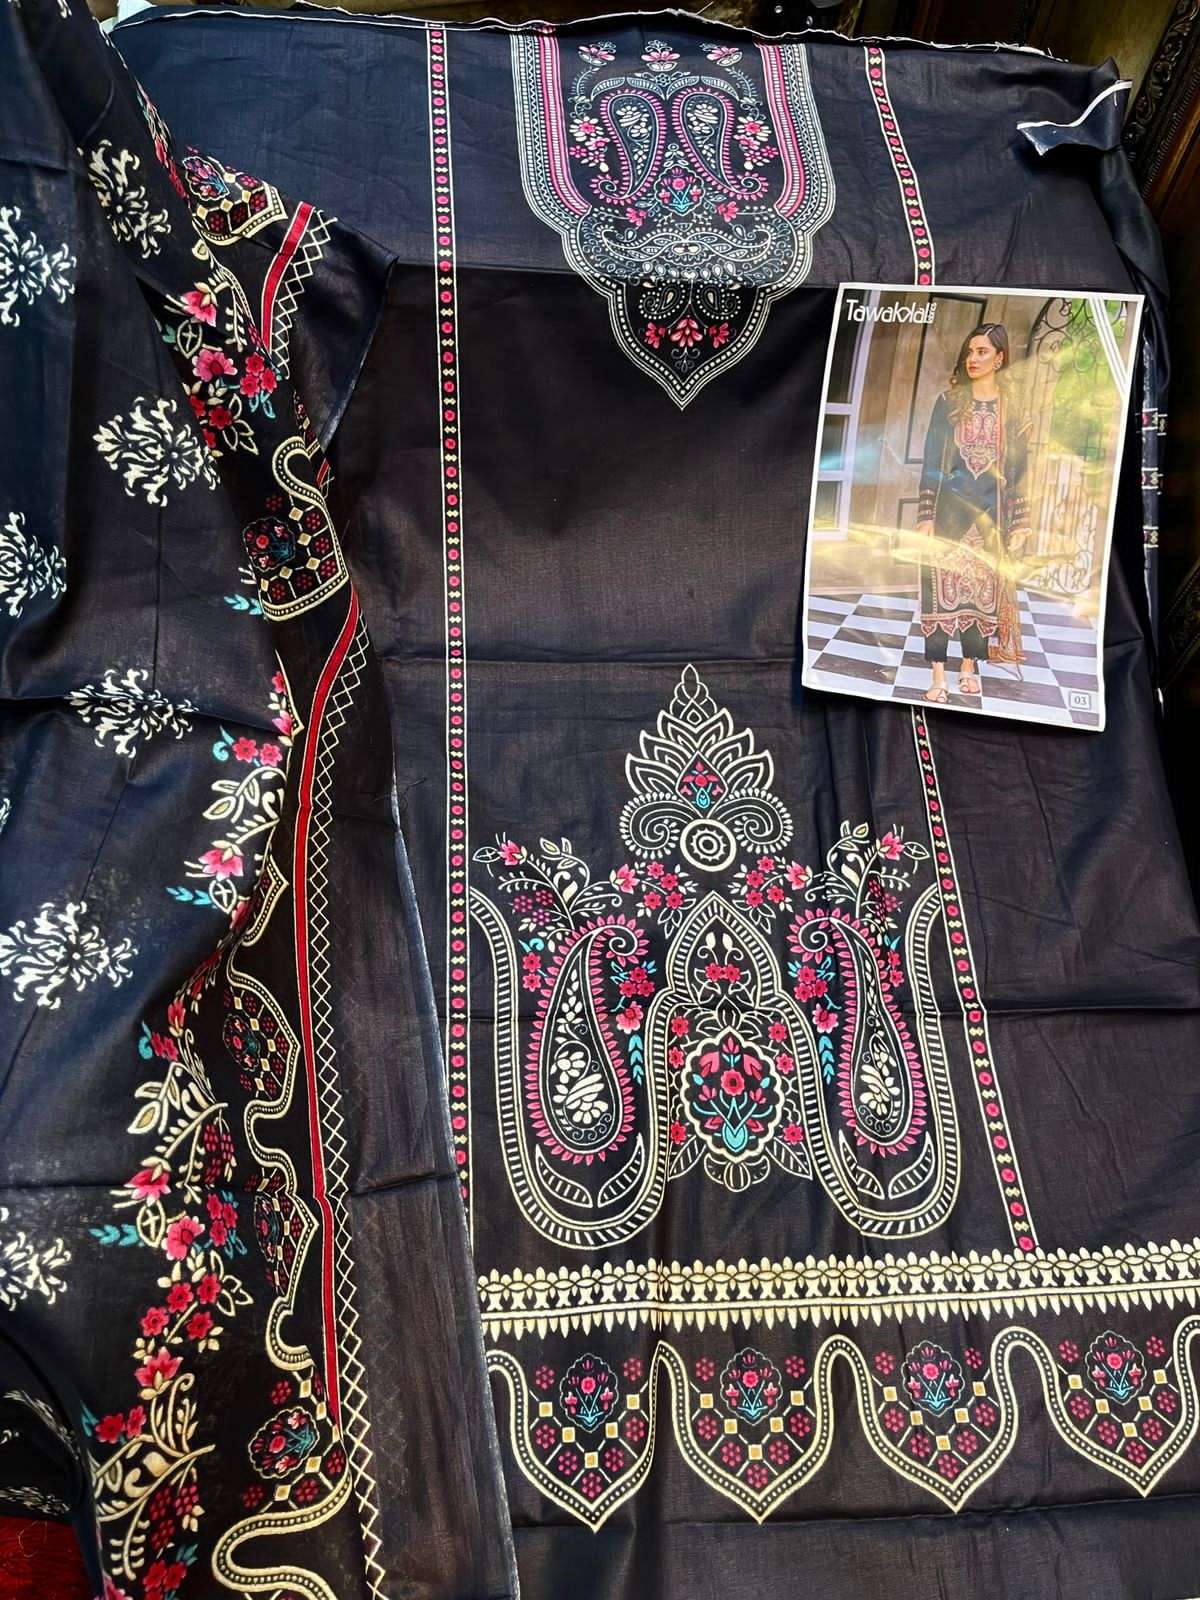 tawakkal fabrics zaafira pakistani salwar kameez wholesale price